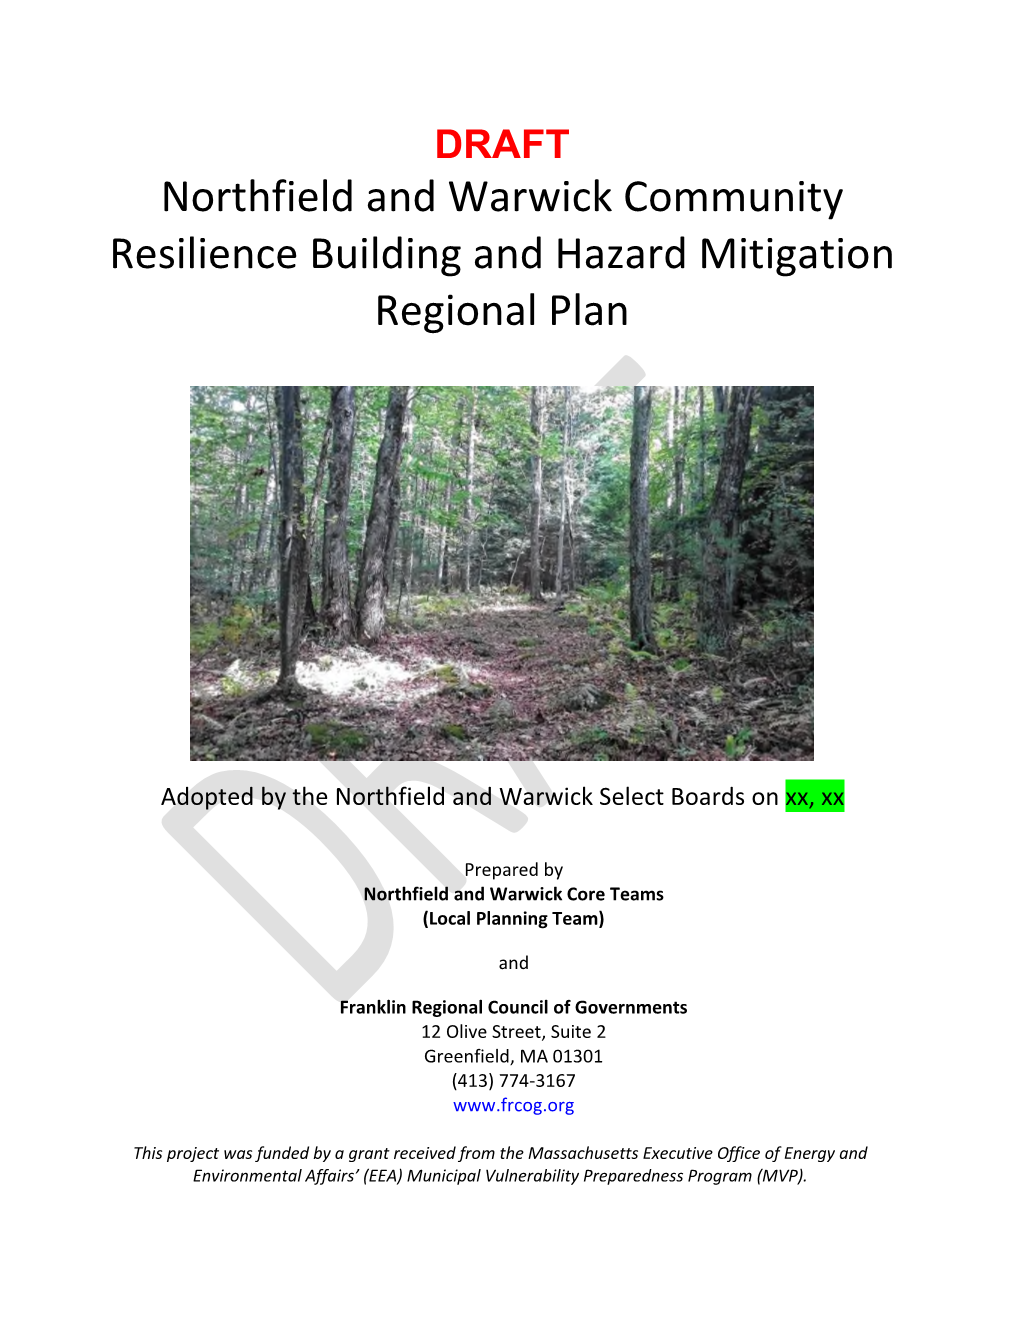 Northfield and Warwick Community Resilience Building and Hazard Mitigation Regional Plan